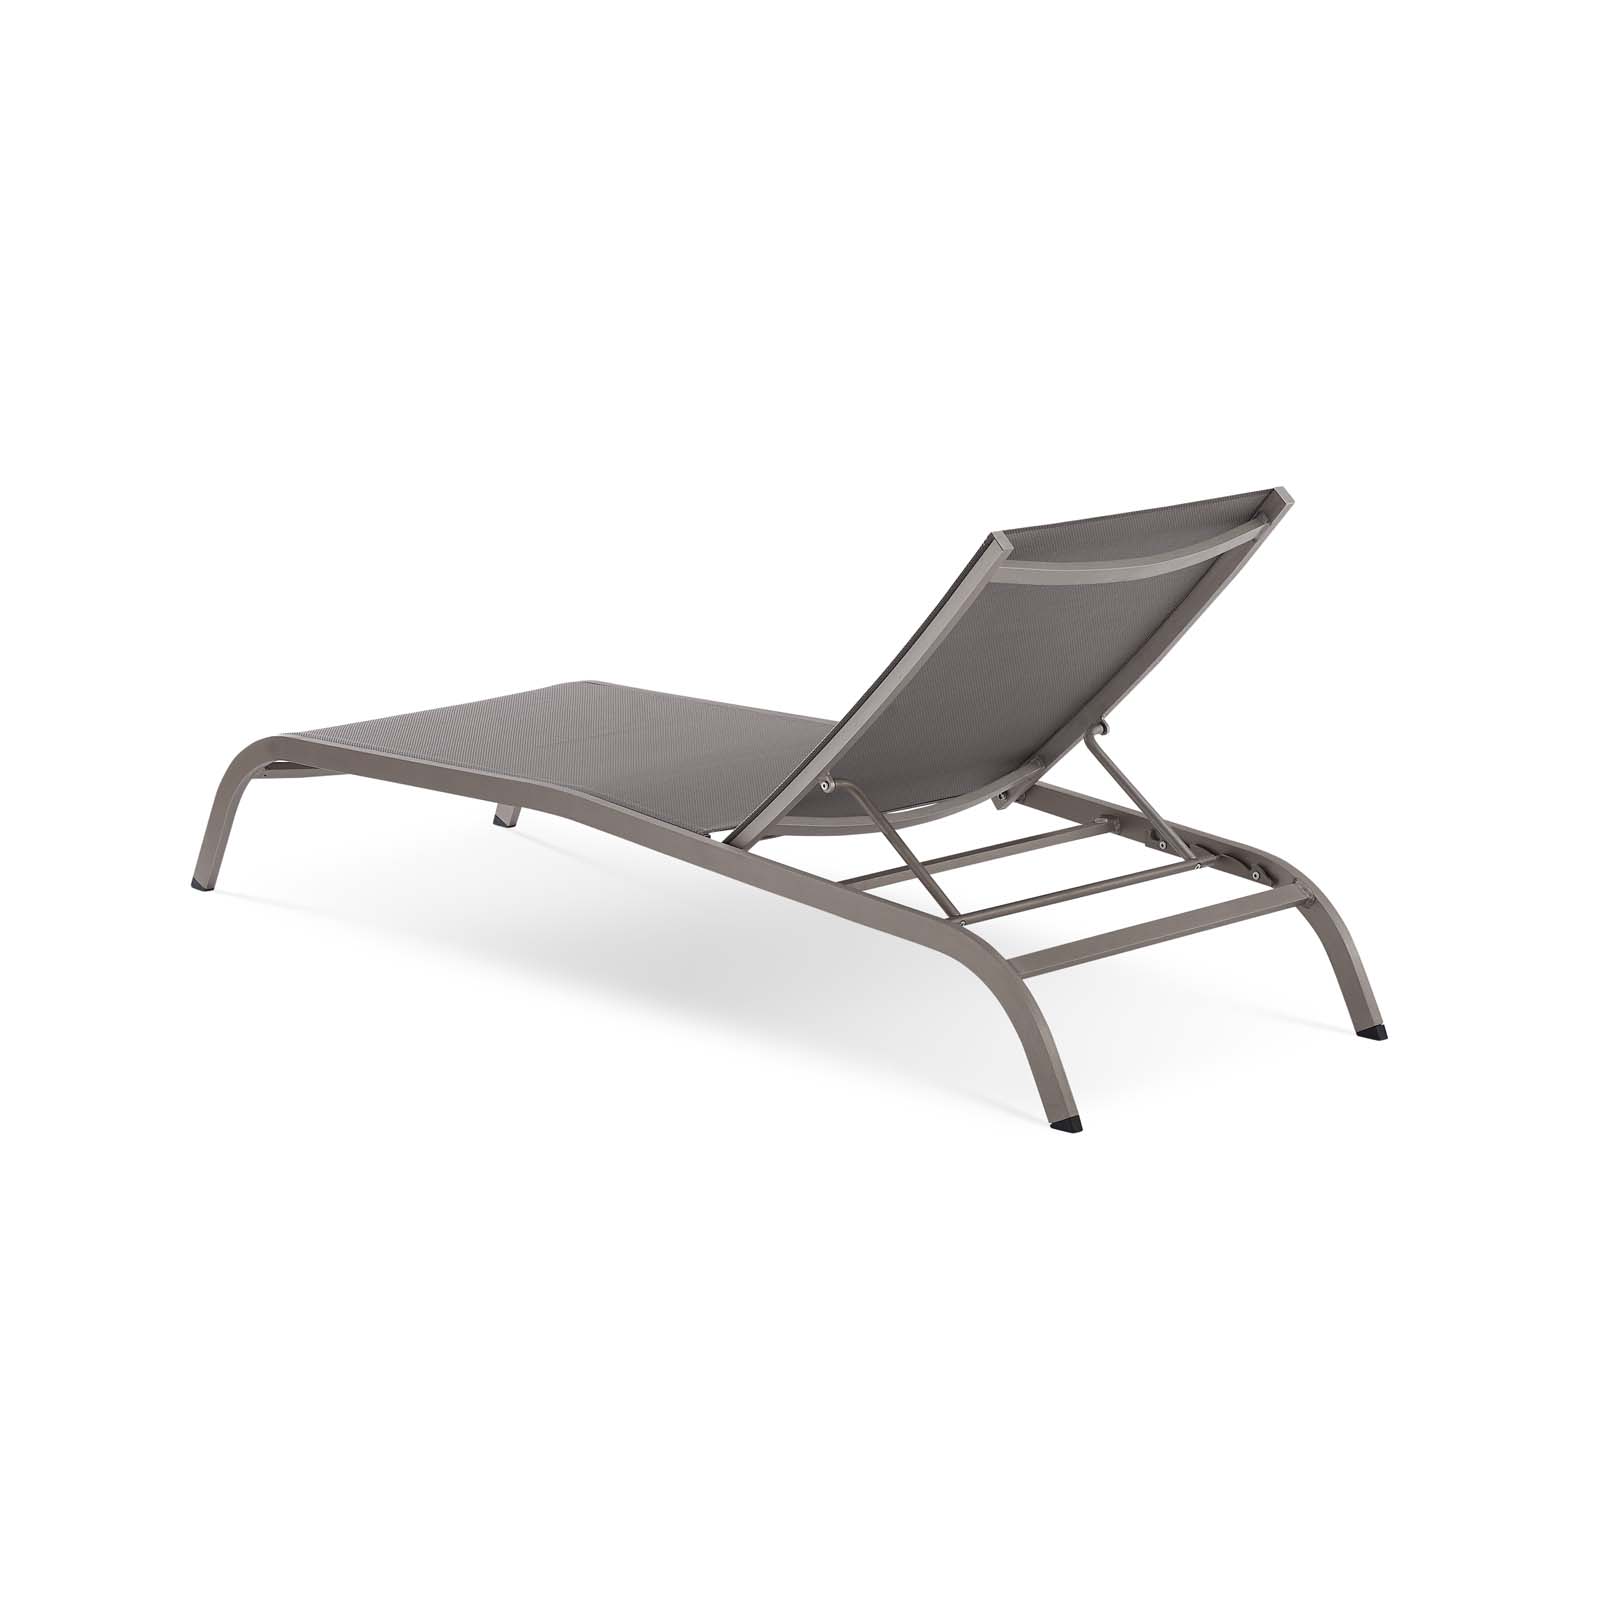 Contemporary Modern Urban Designer Outdoor Patio Balcony Garden Furniture Lounge Lounge Chair, Aluminum, Grey Gray - image 4 of 7